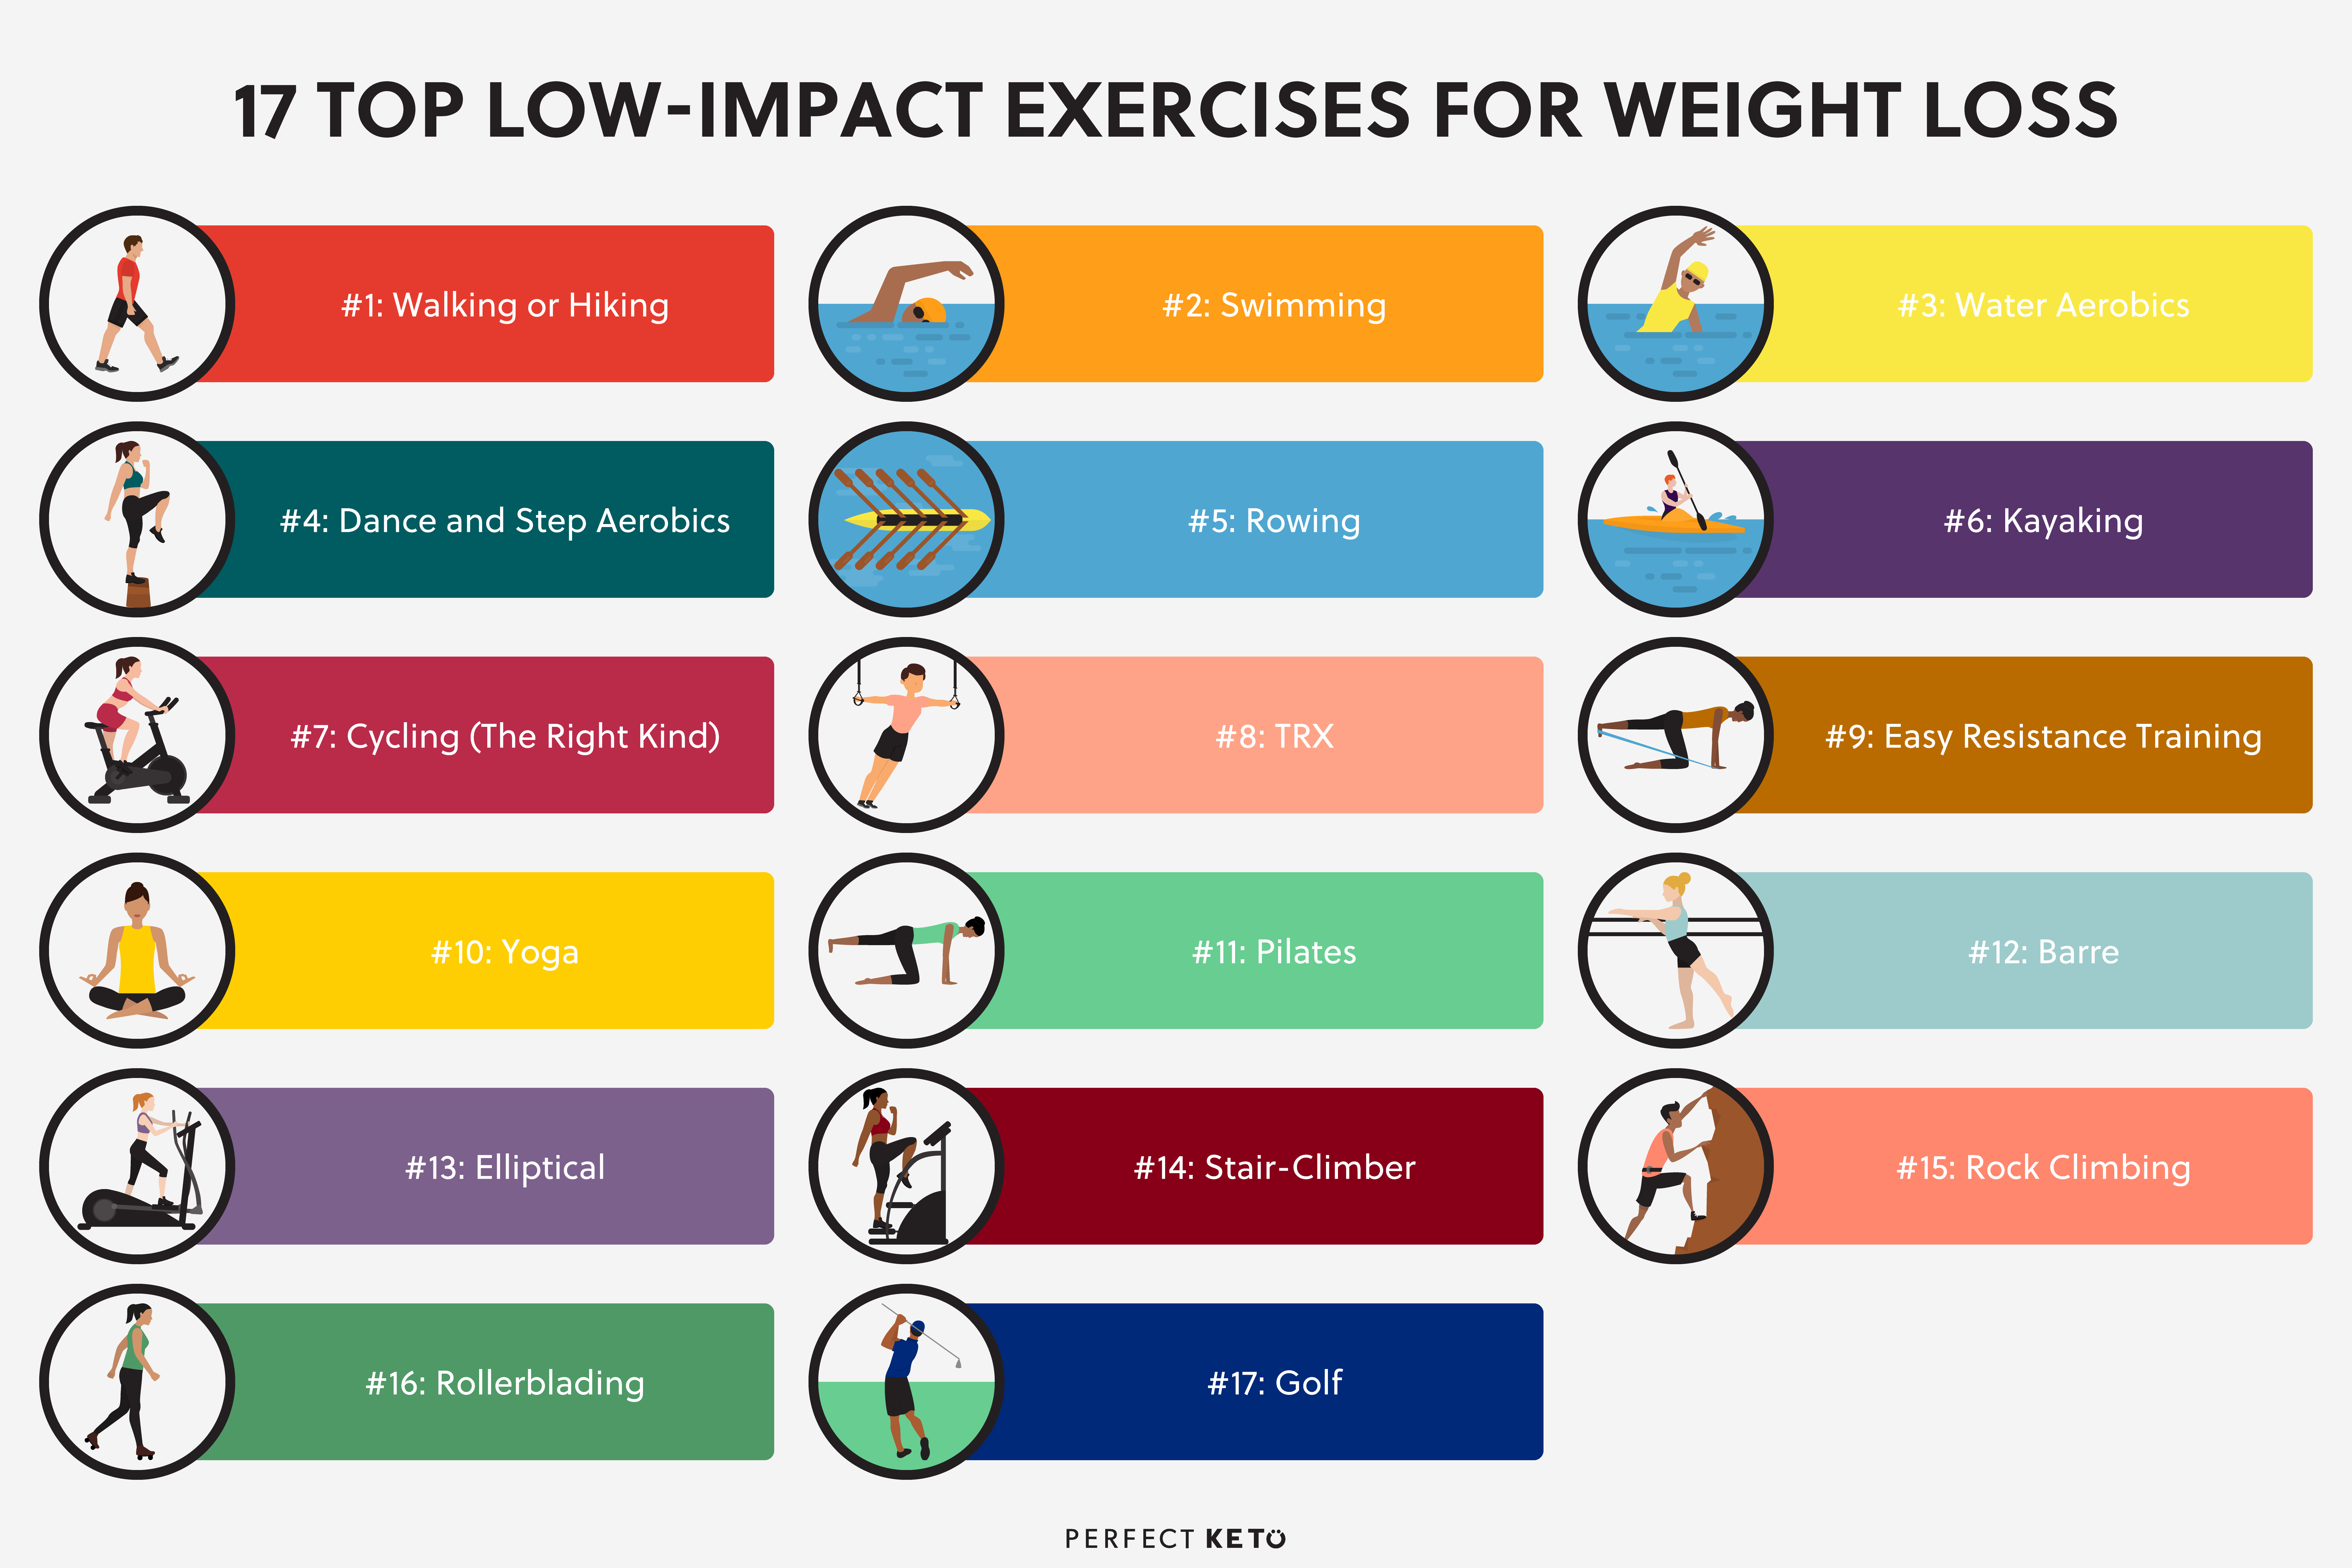 15 low-impact exercise ideas - Rest Less